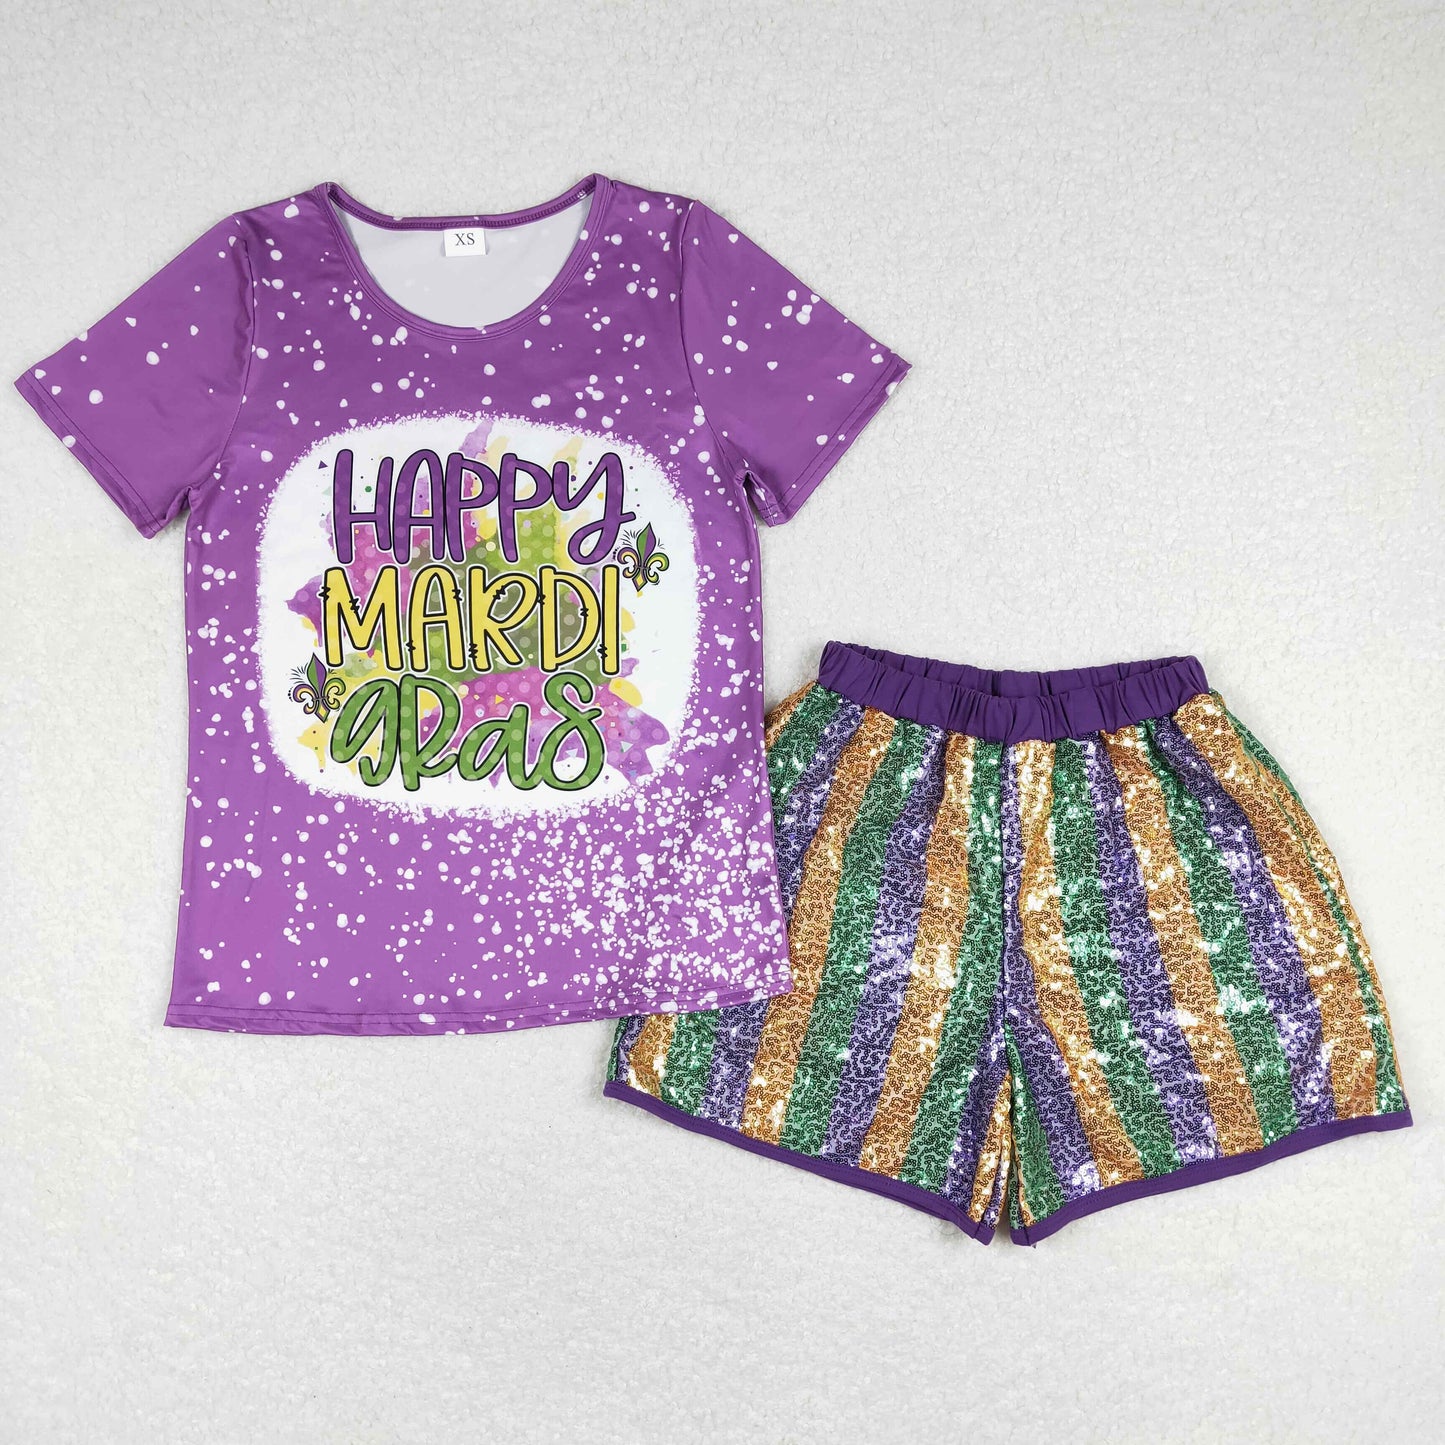 GSSO0529 Adult Purple Happy Mardi Gras Top Sequined Shorts Woman Clothes Set